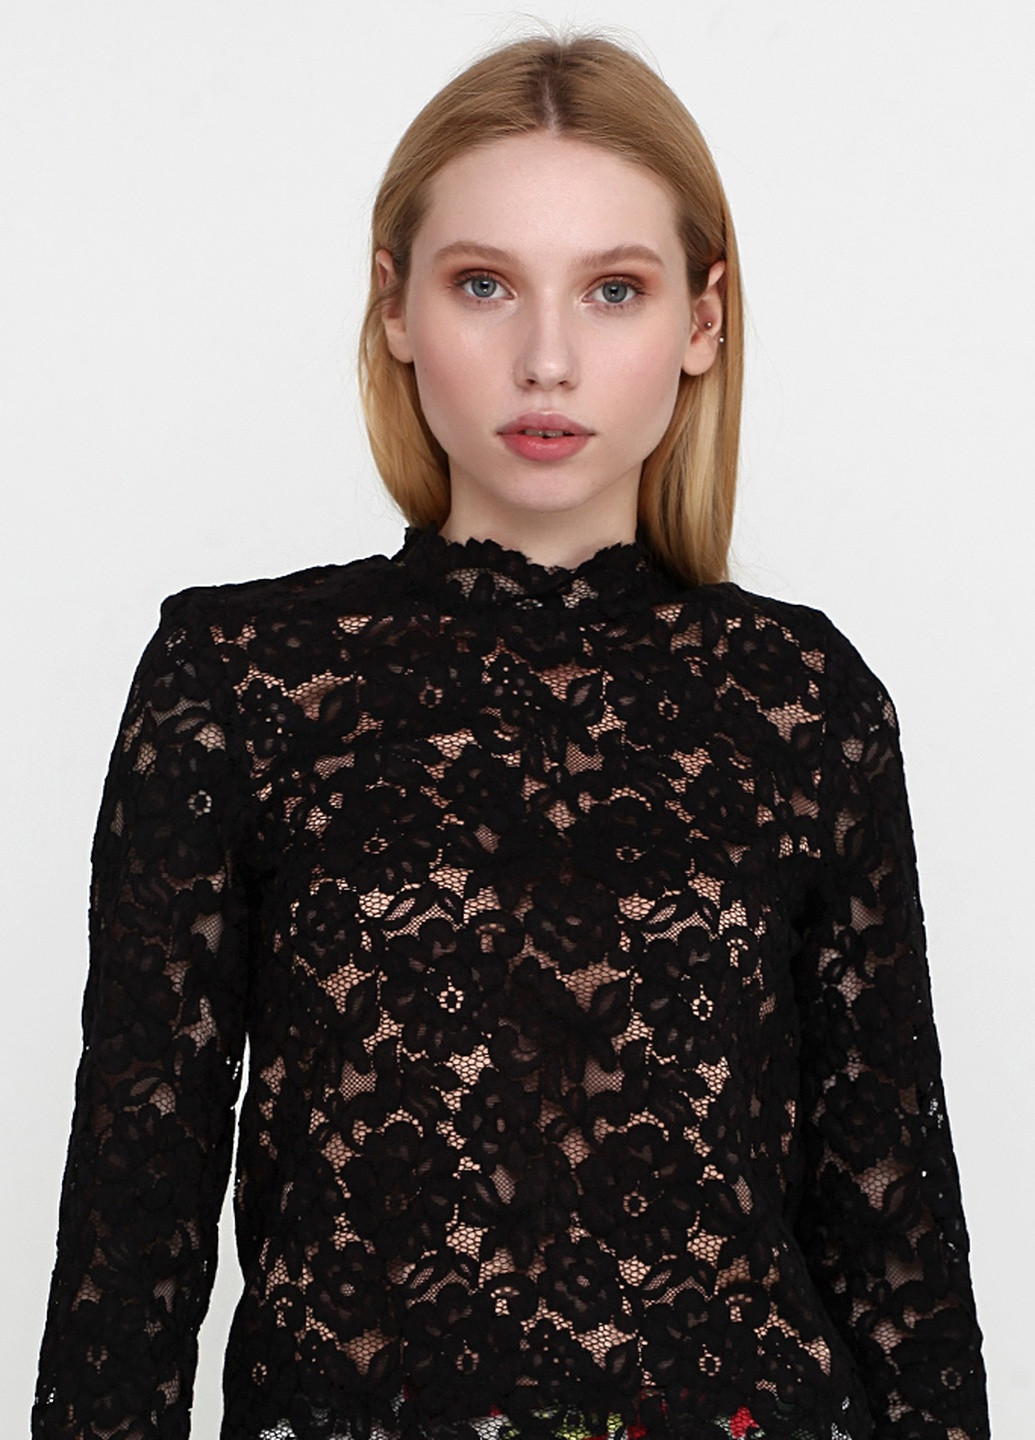 Черная демисезонная блуза кружевная H&M